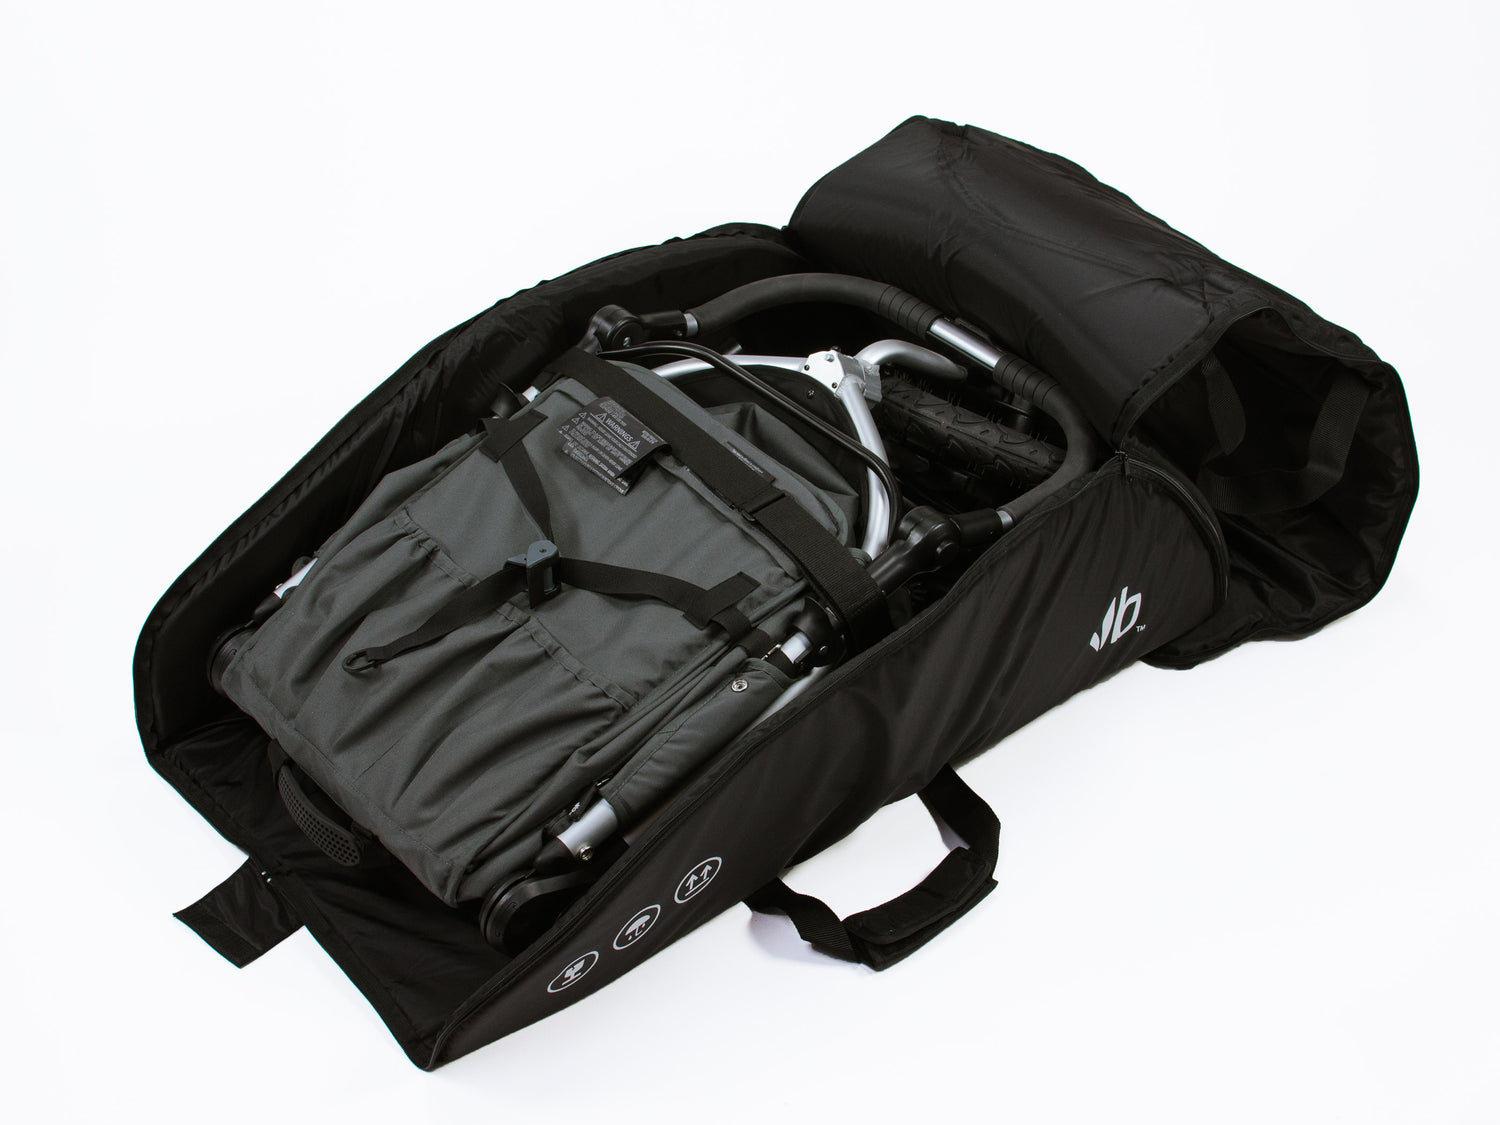 bag with stroller